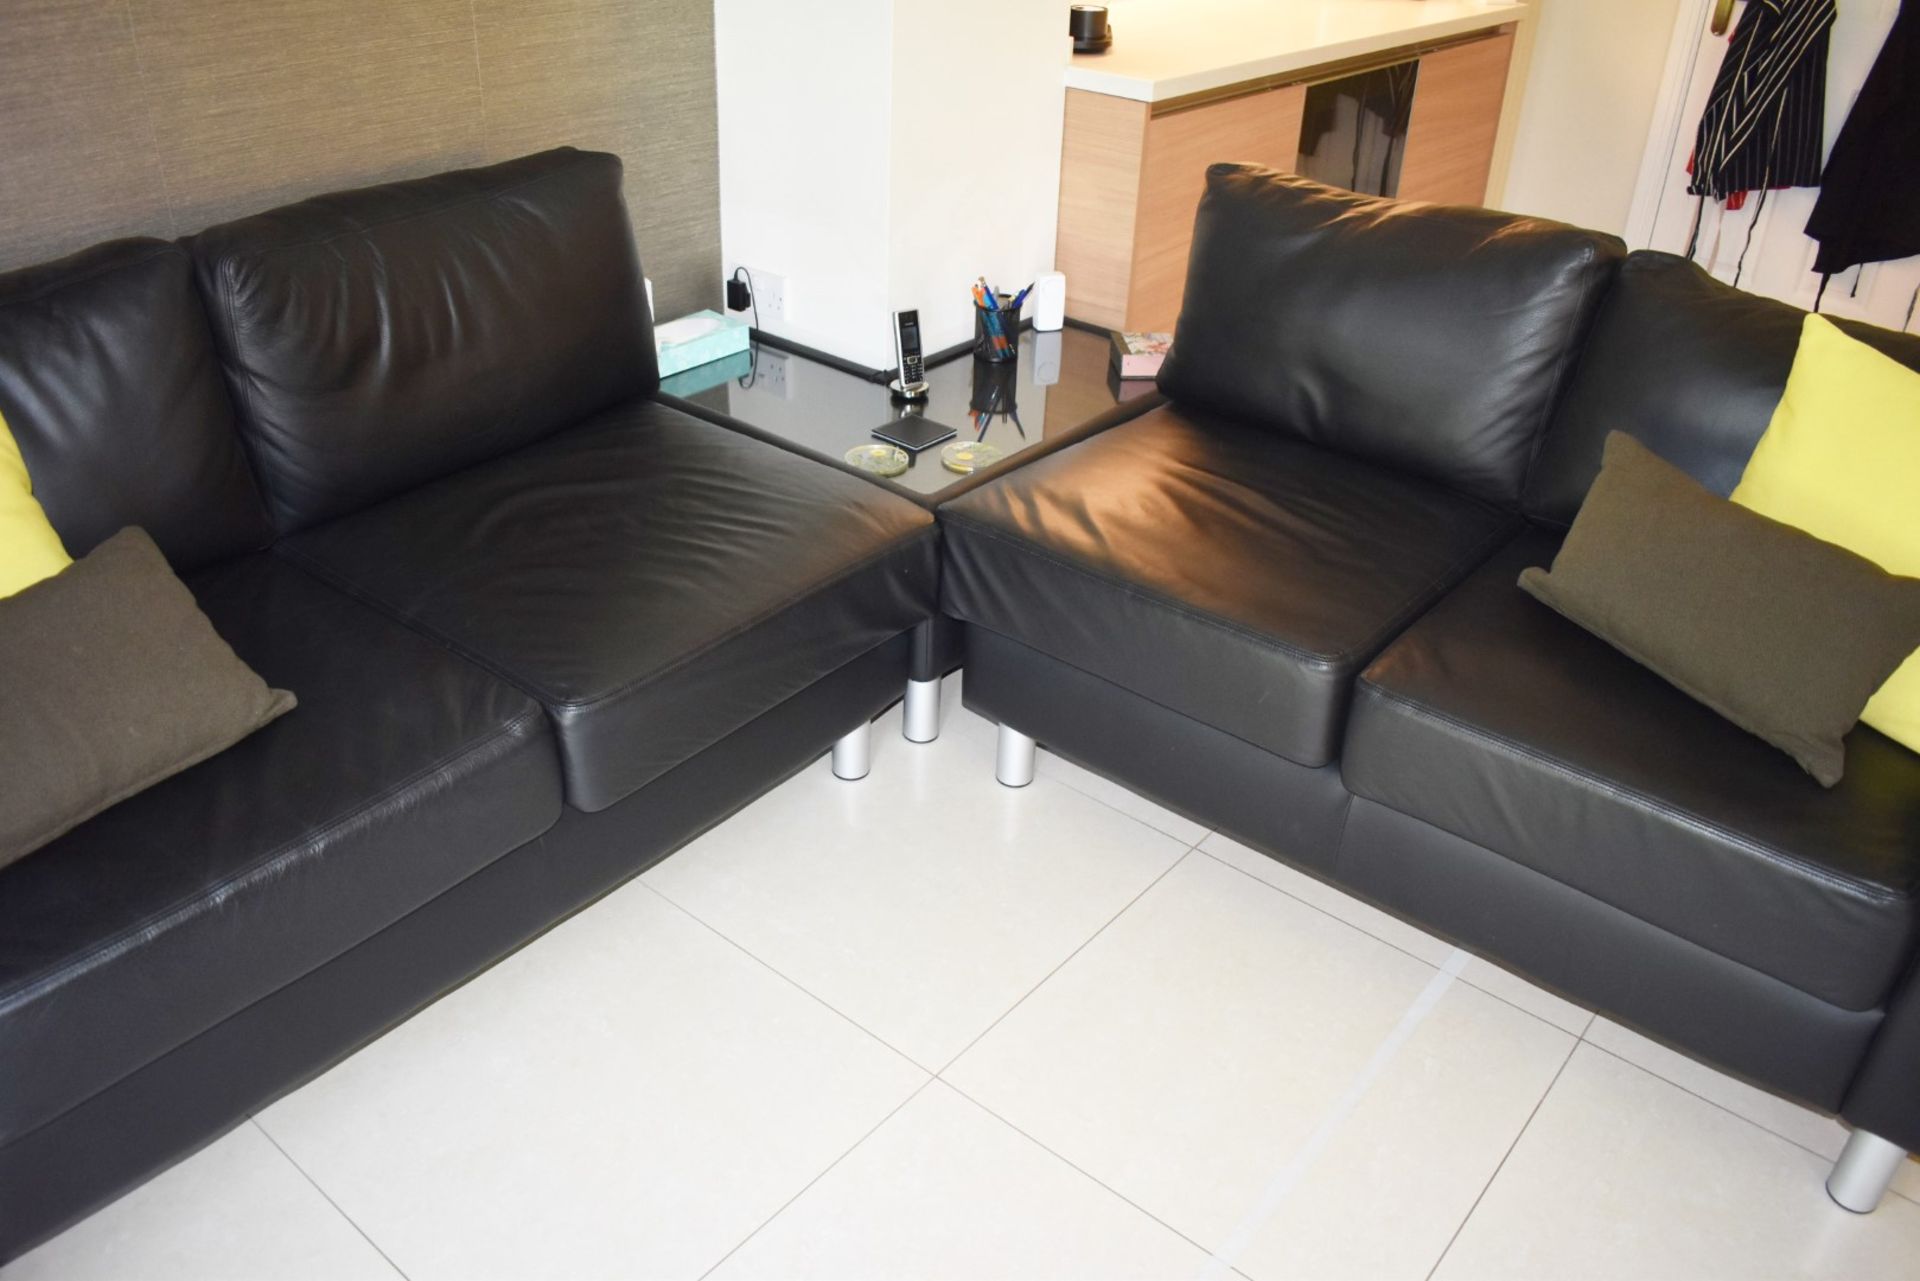 1 x Saxon Bespoke Corner Sofa Upholstered in Genuine Black Leather - Three-Piece Contemporary Design - Image 8 of 14